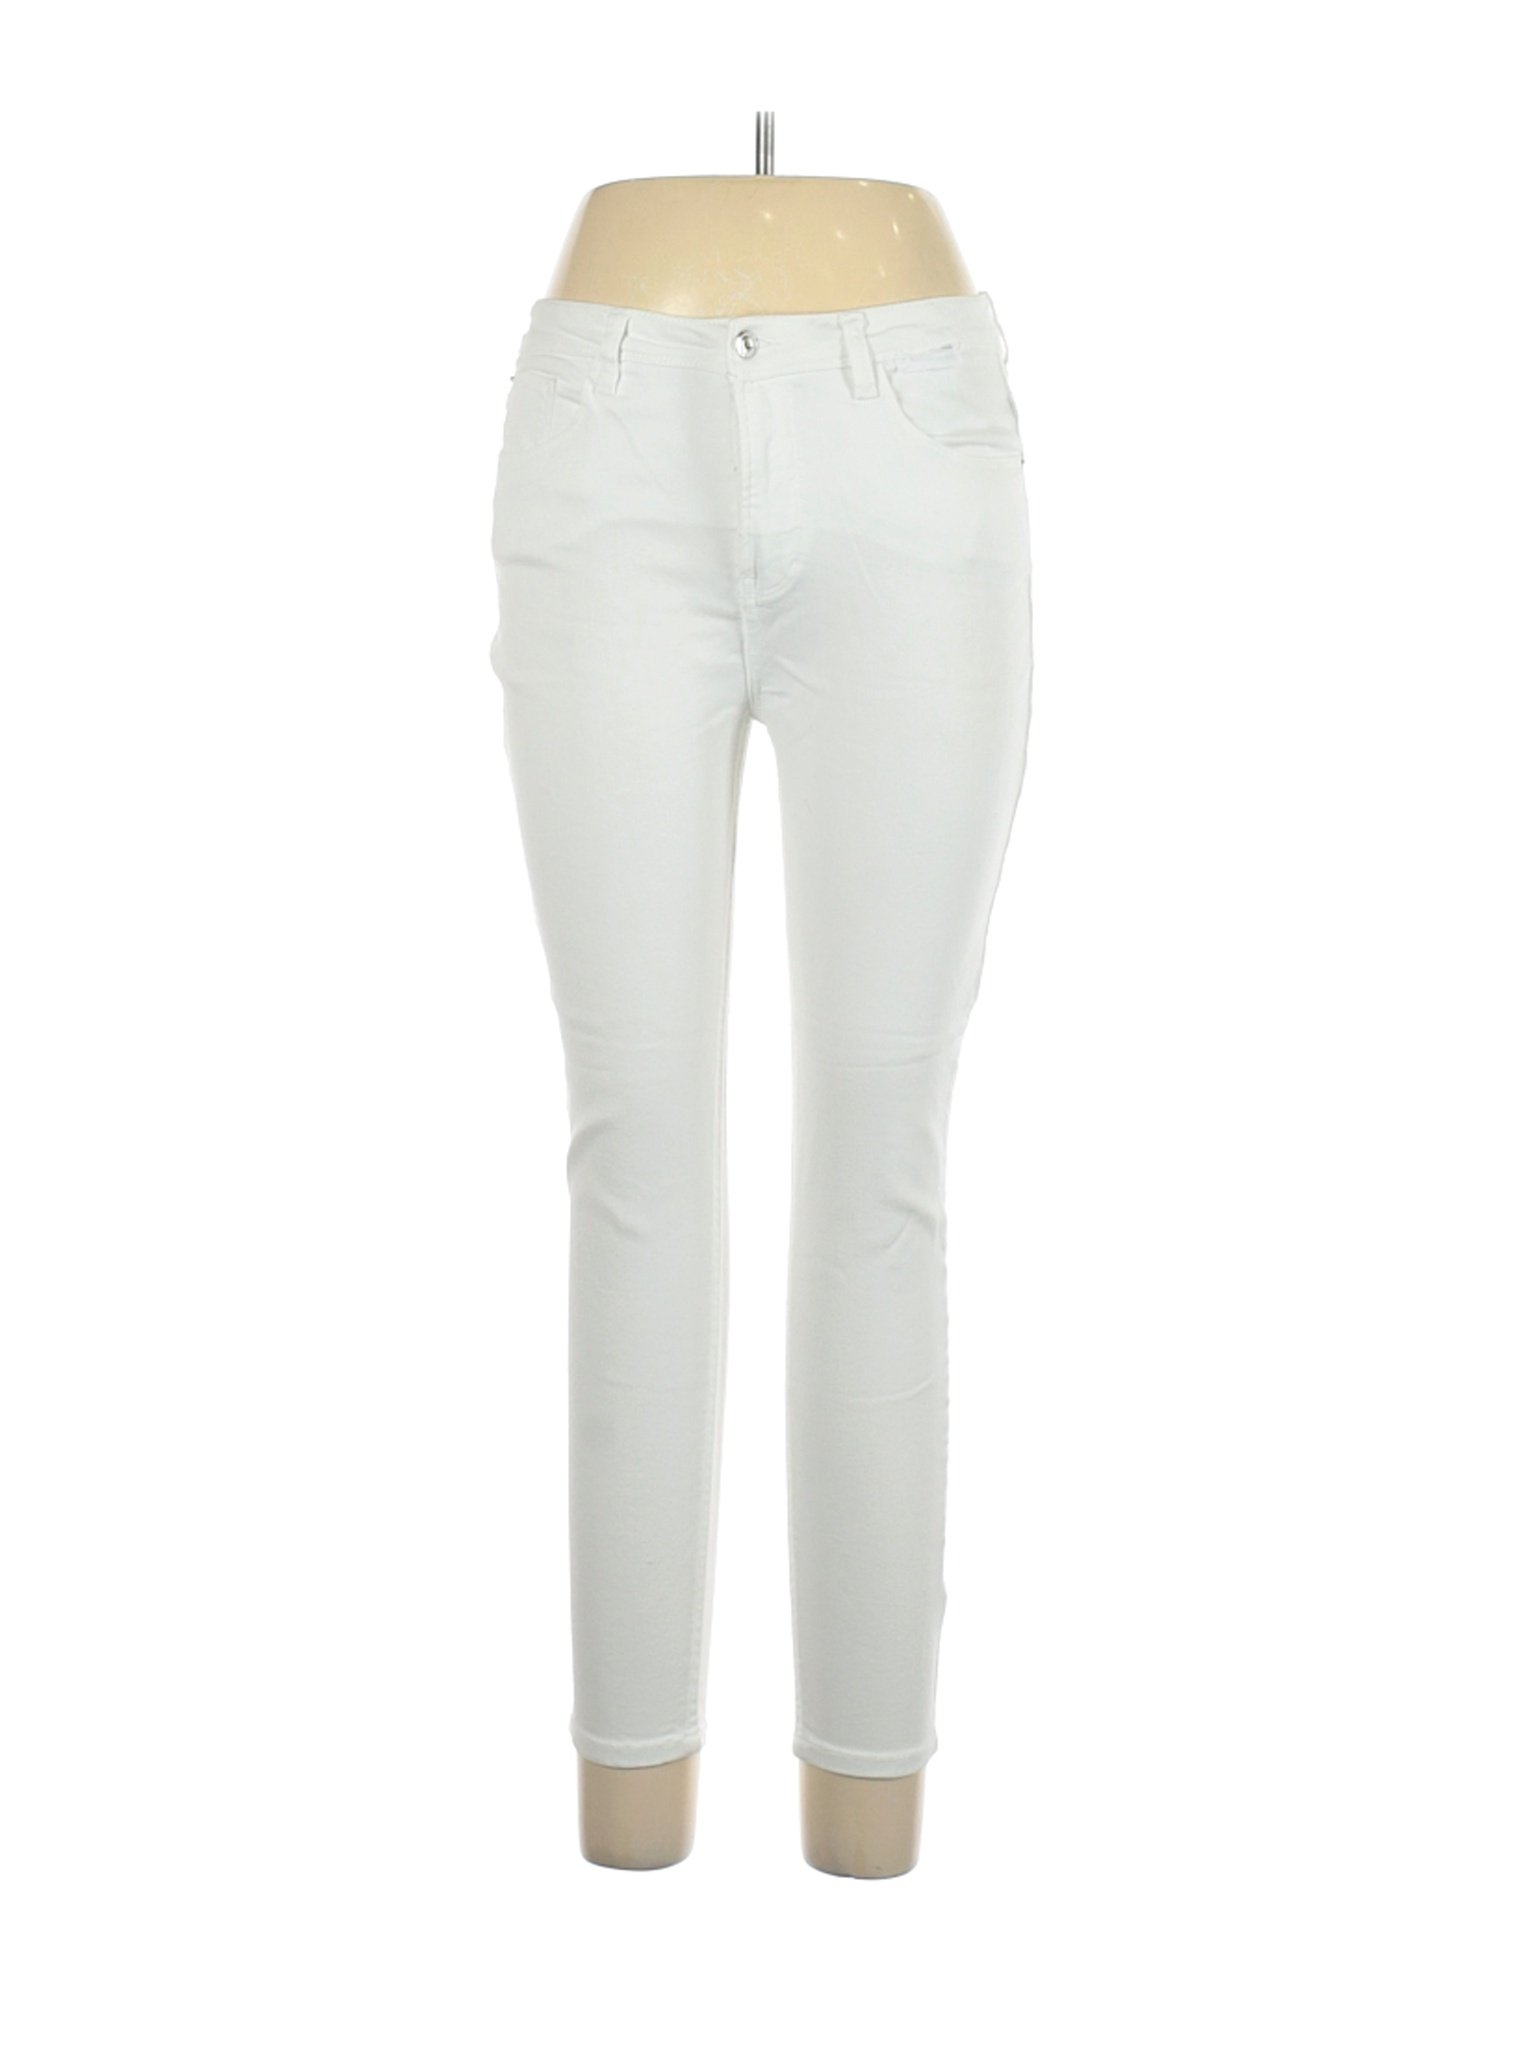 Kensie Women White Jeans 10 | eBay